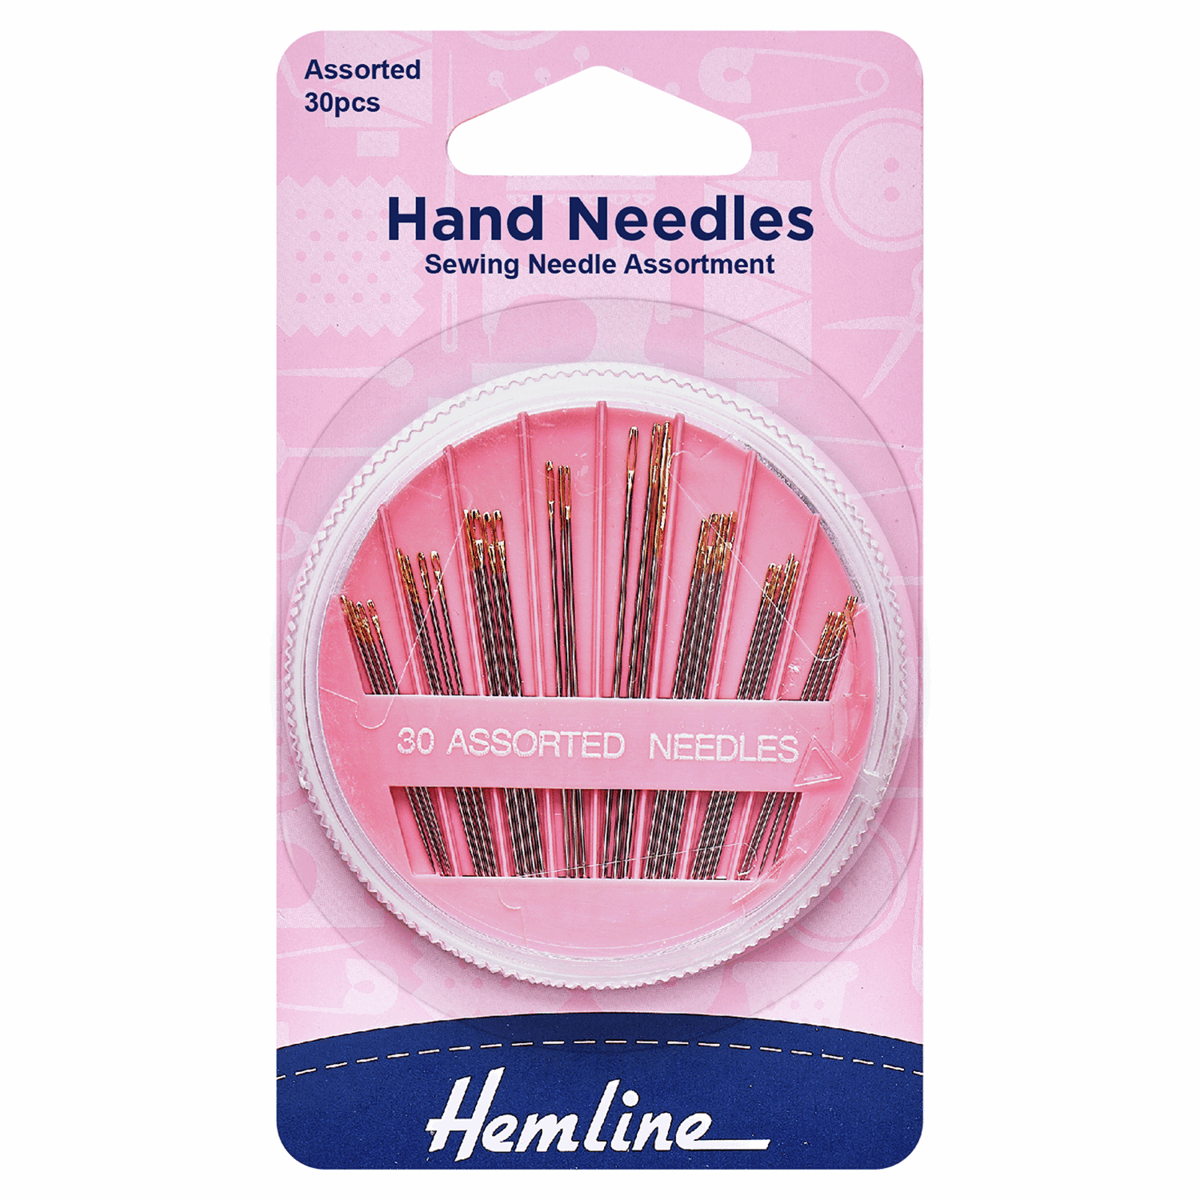 Hemline Hand Sewing Needles: Sewing Assortment Compact